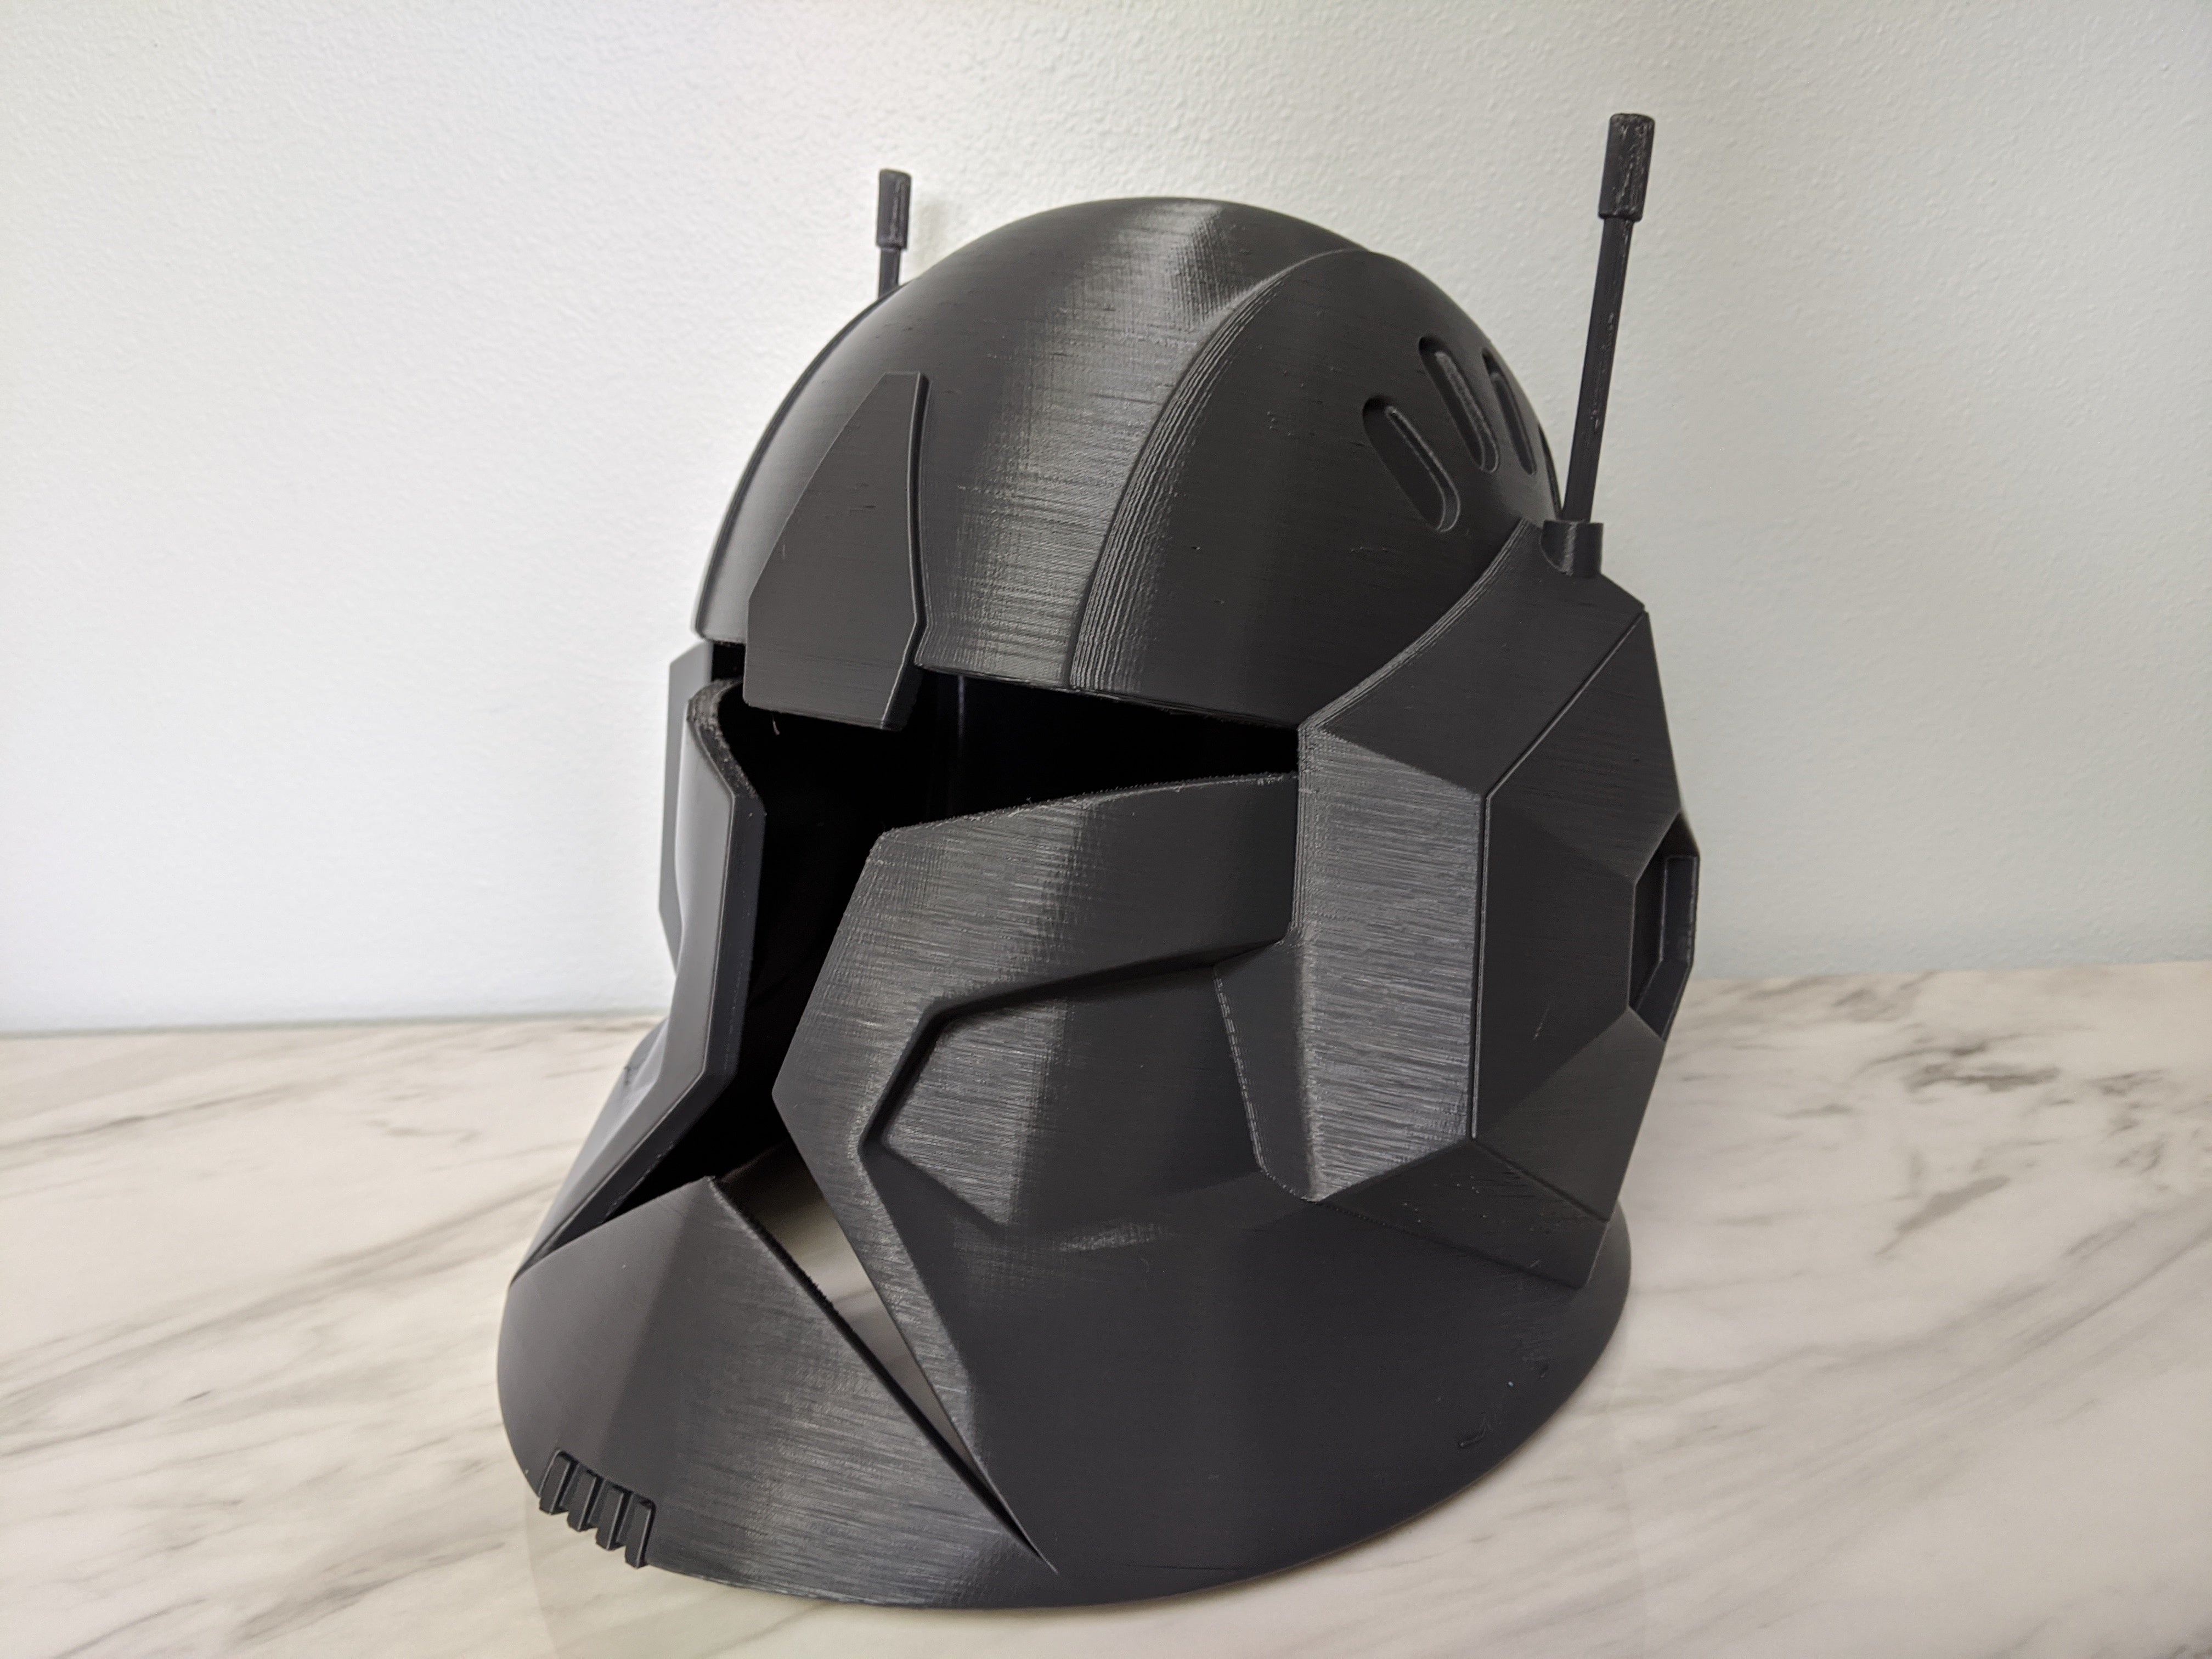 Animated Spec Ops Clone Trooper Helmet - DIY - Galactic Armory